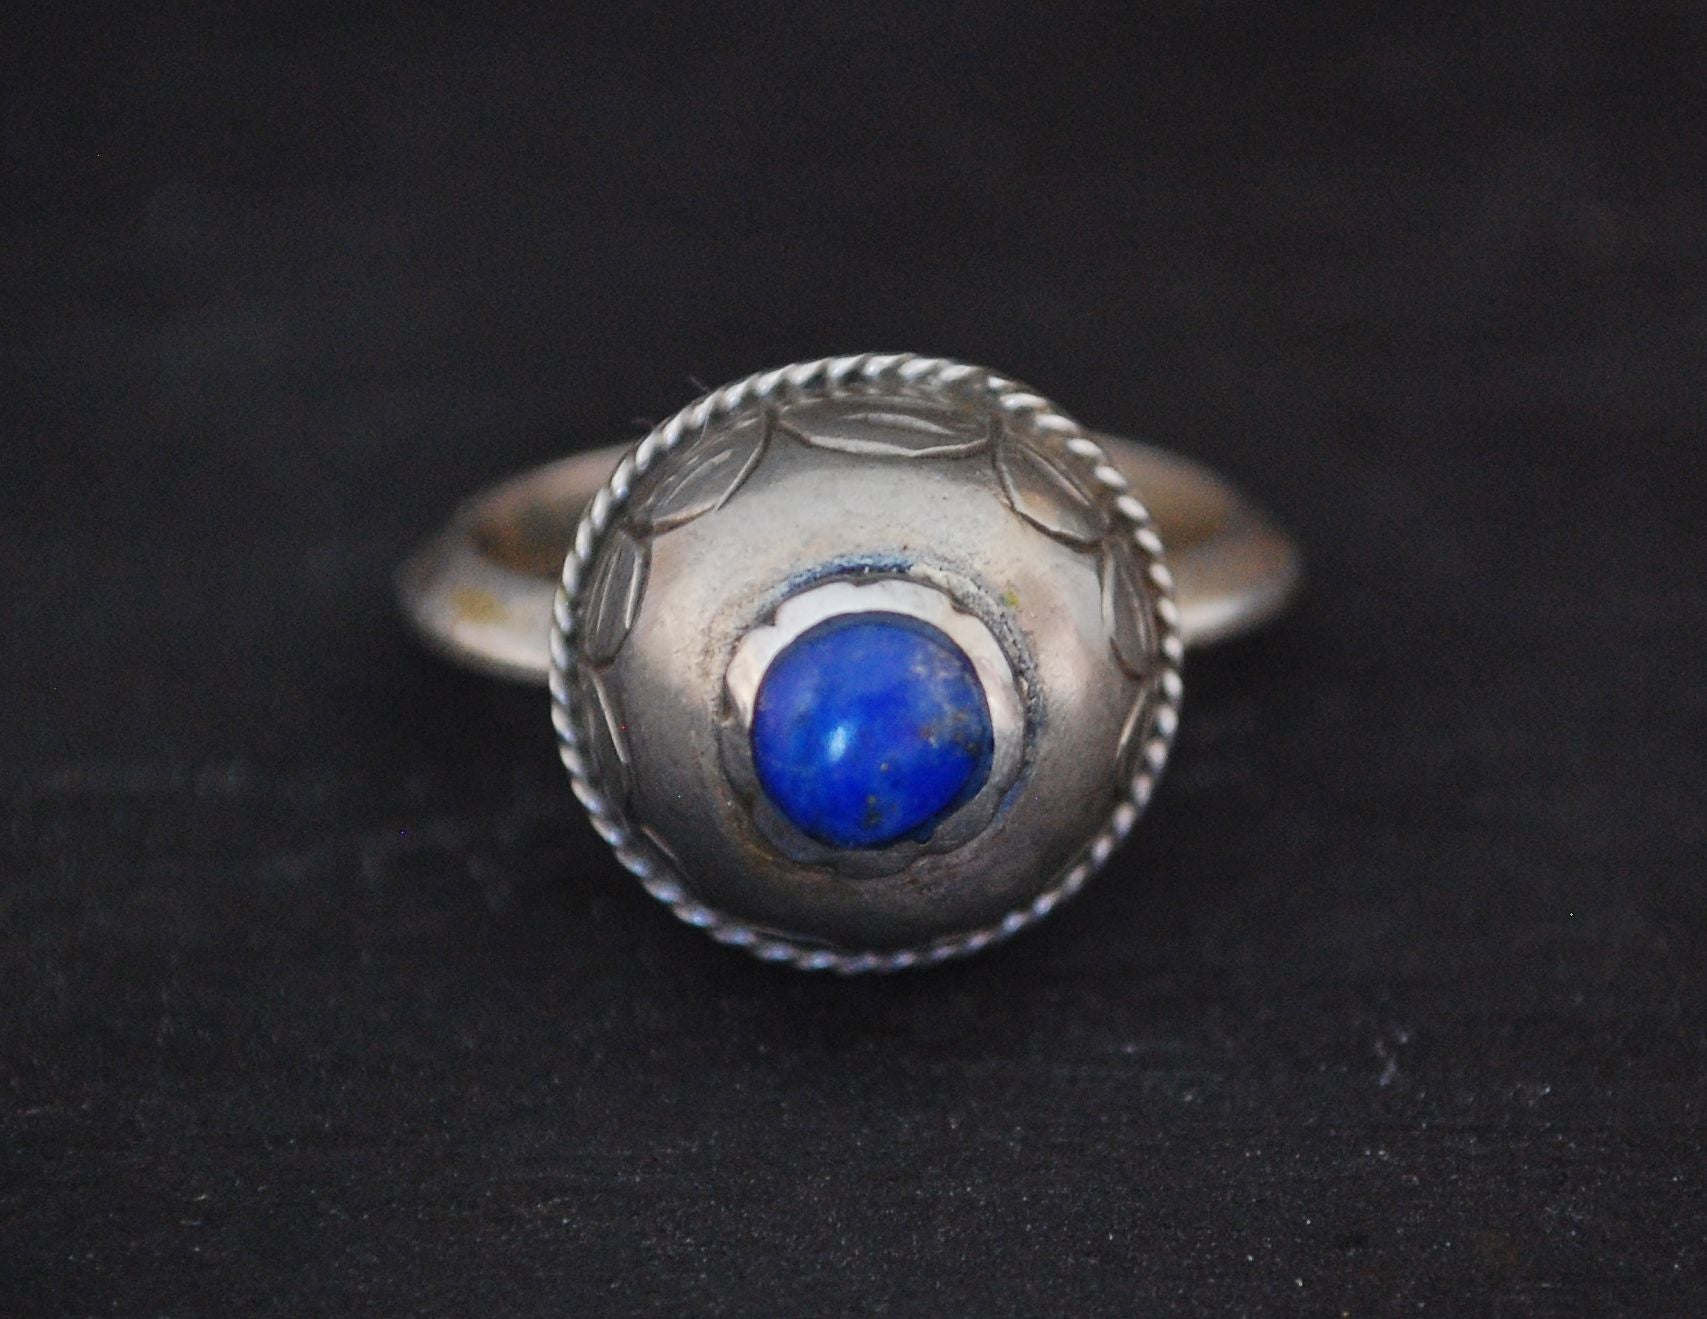 Vintage Afghani Lapis Lazuli Ring - Size 9